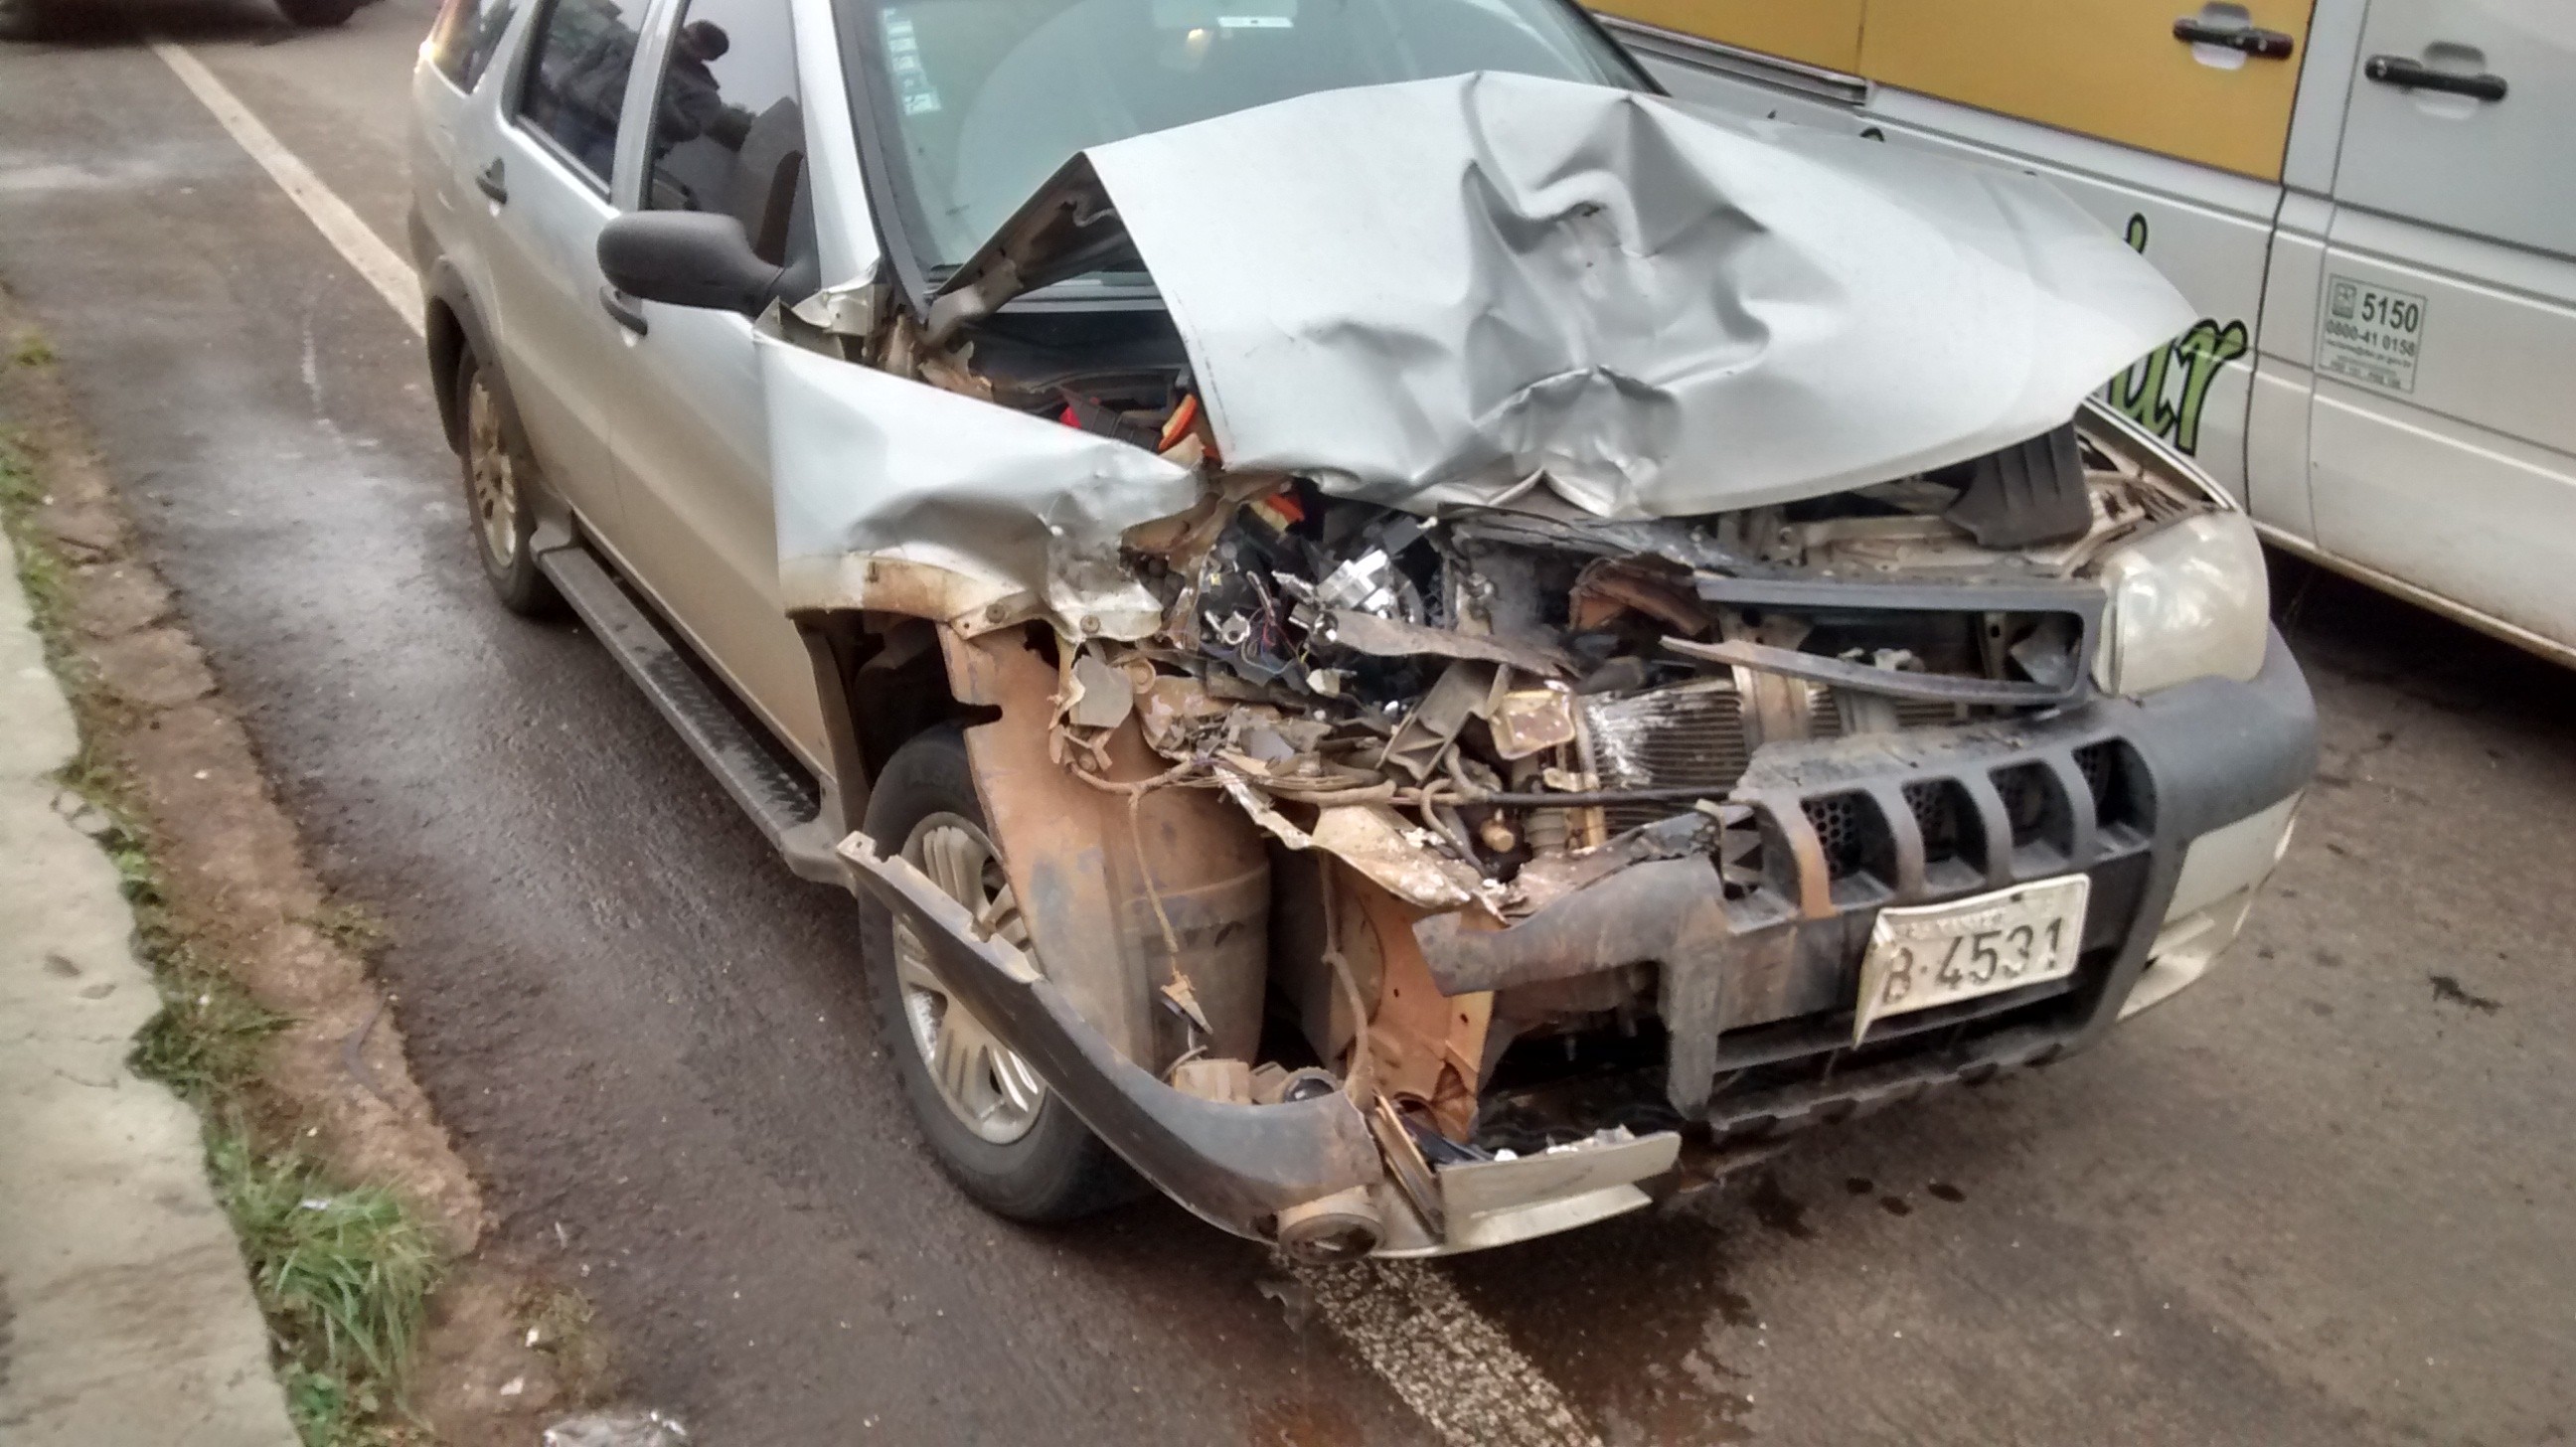 Veículo teve sua frente totalmente destruída devido ao forte impacto (Foto: José Luiz)